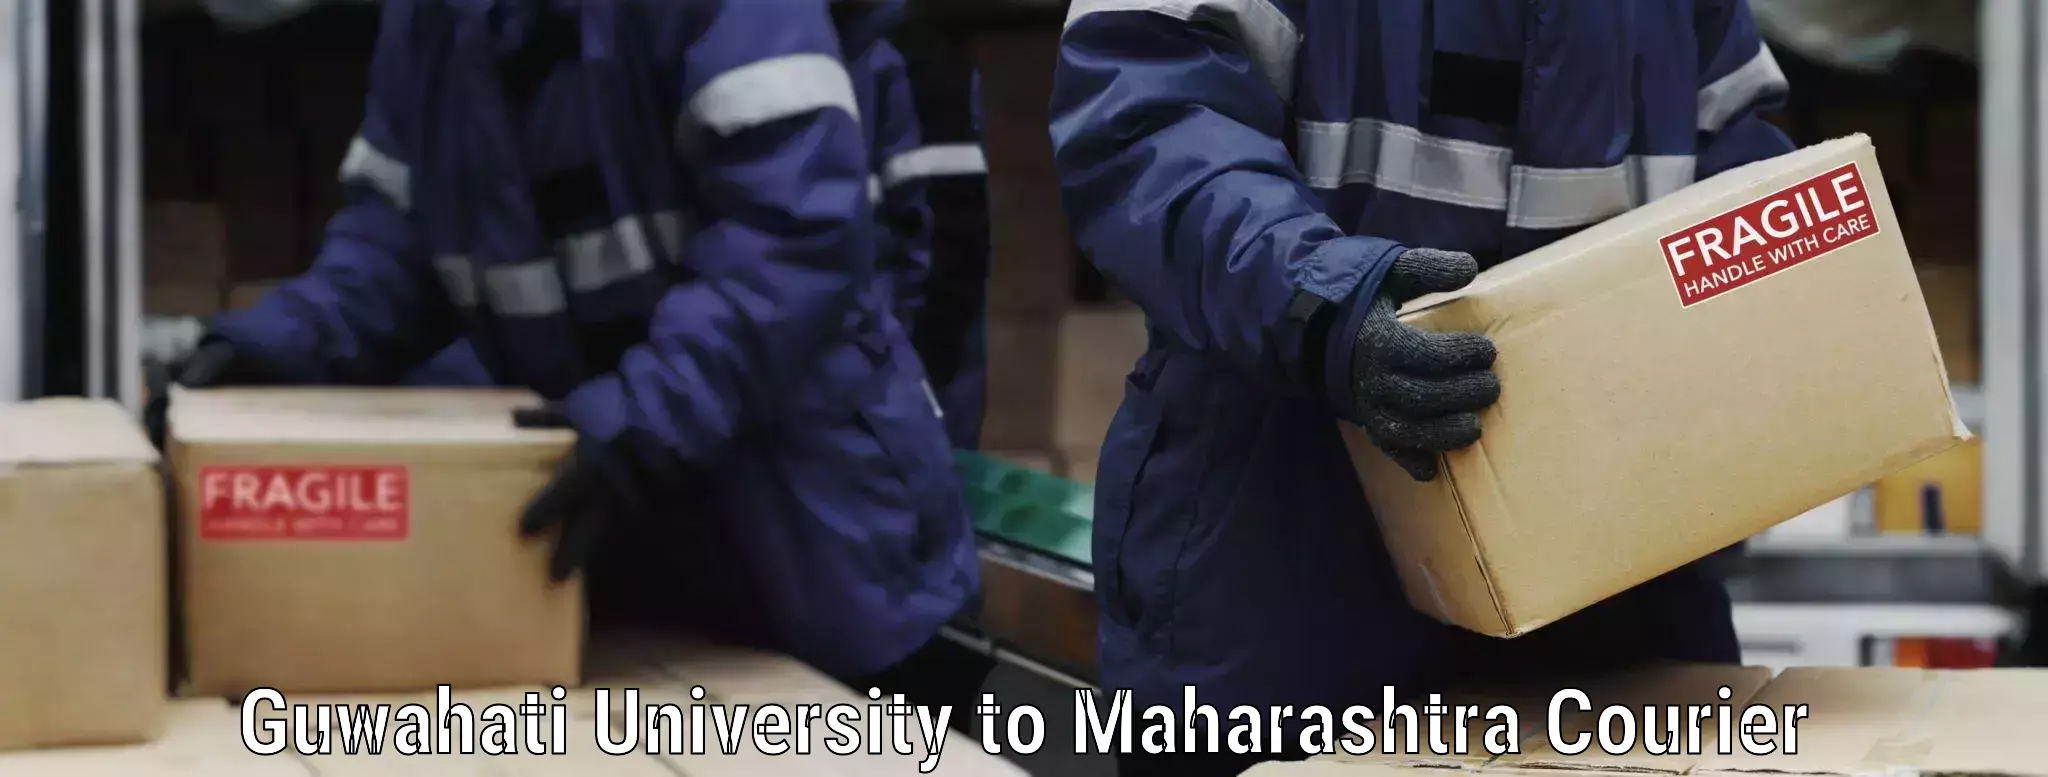 Professional movers and packers Guwahati University to Maharashtra